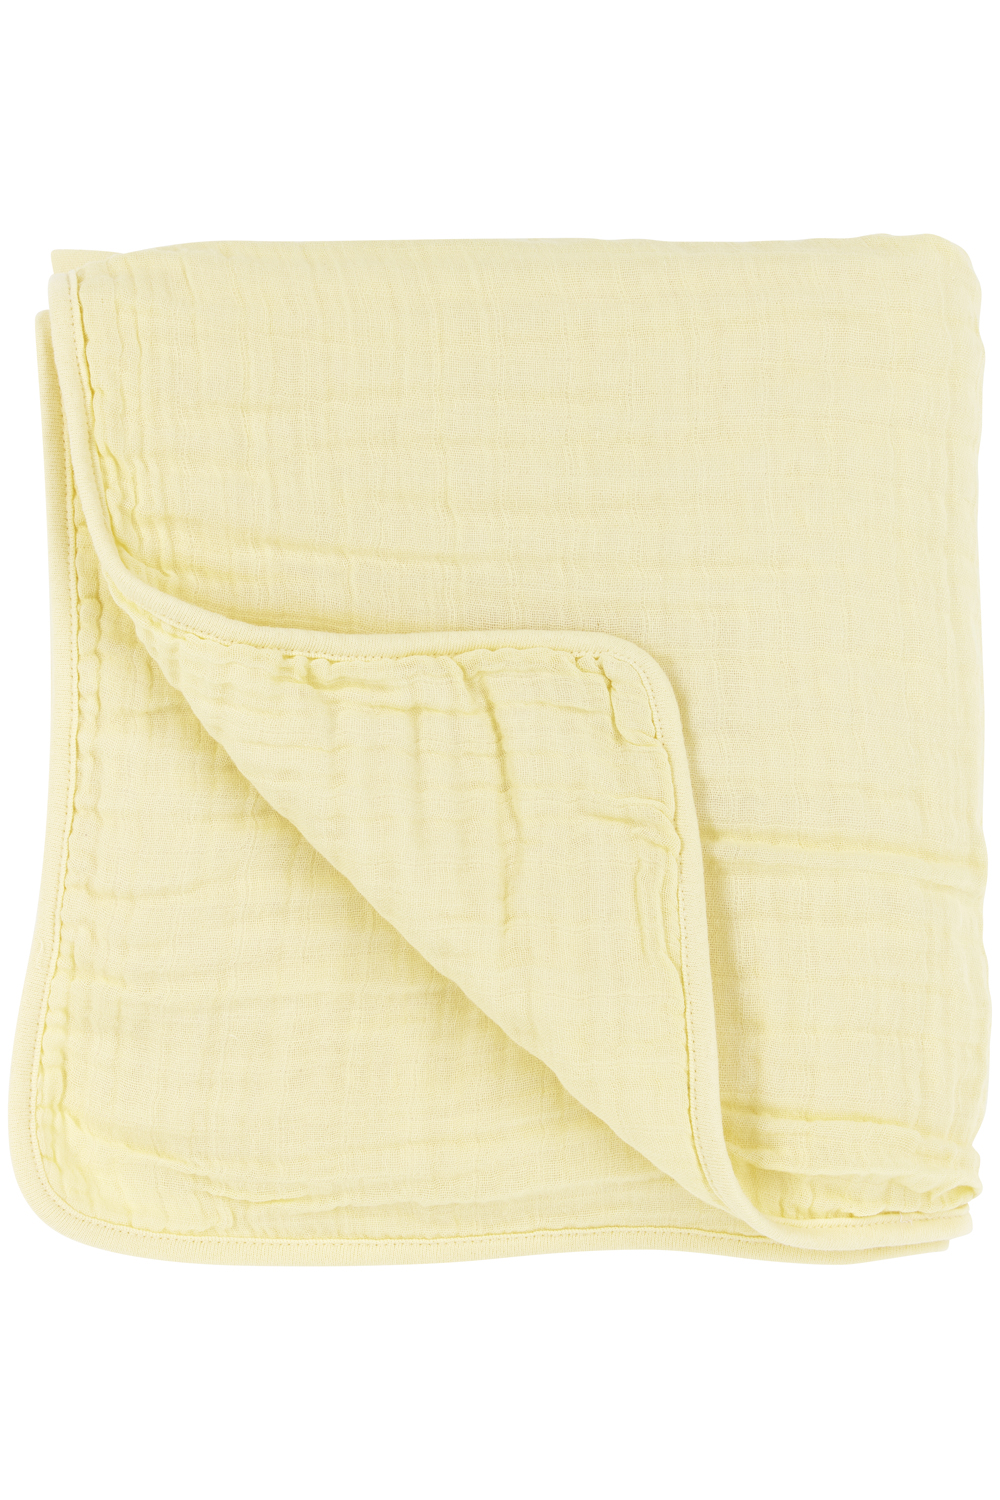 Musselin Multidecke Uni - Soft Yellow - 120x120cm